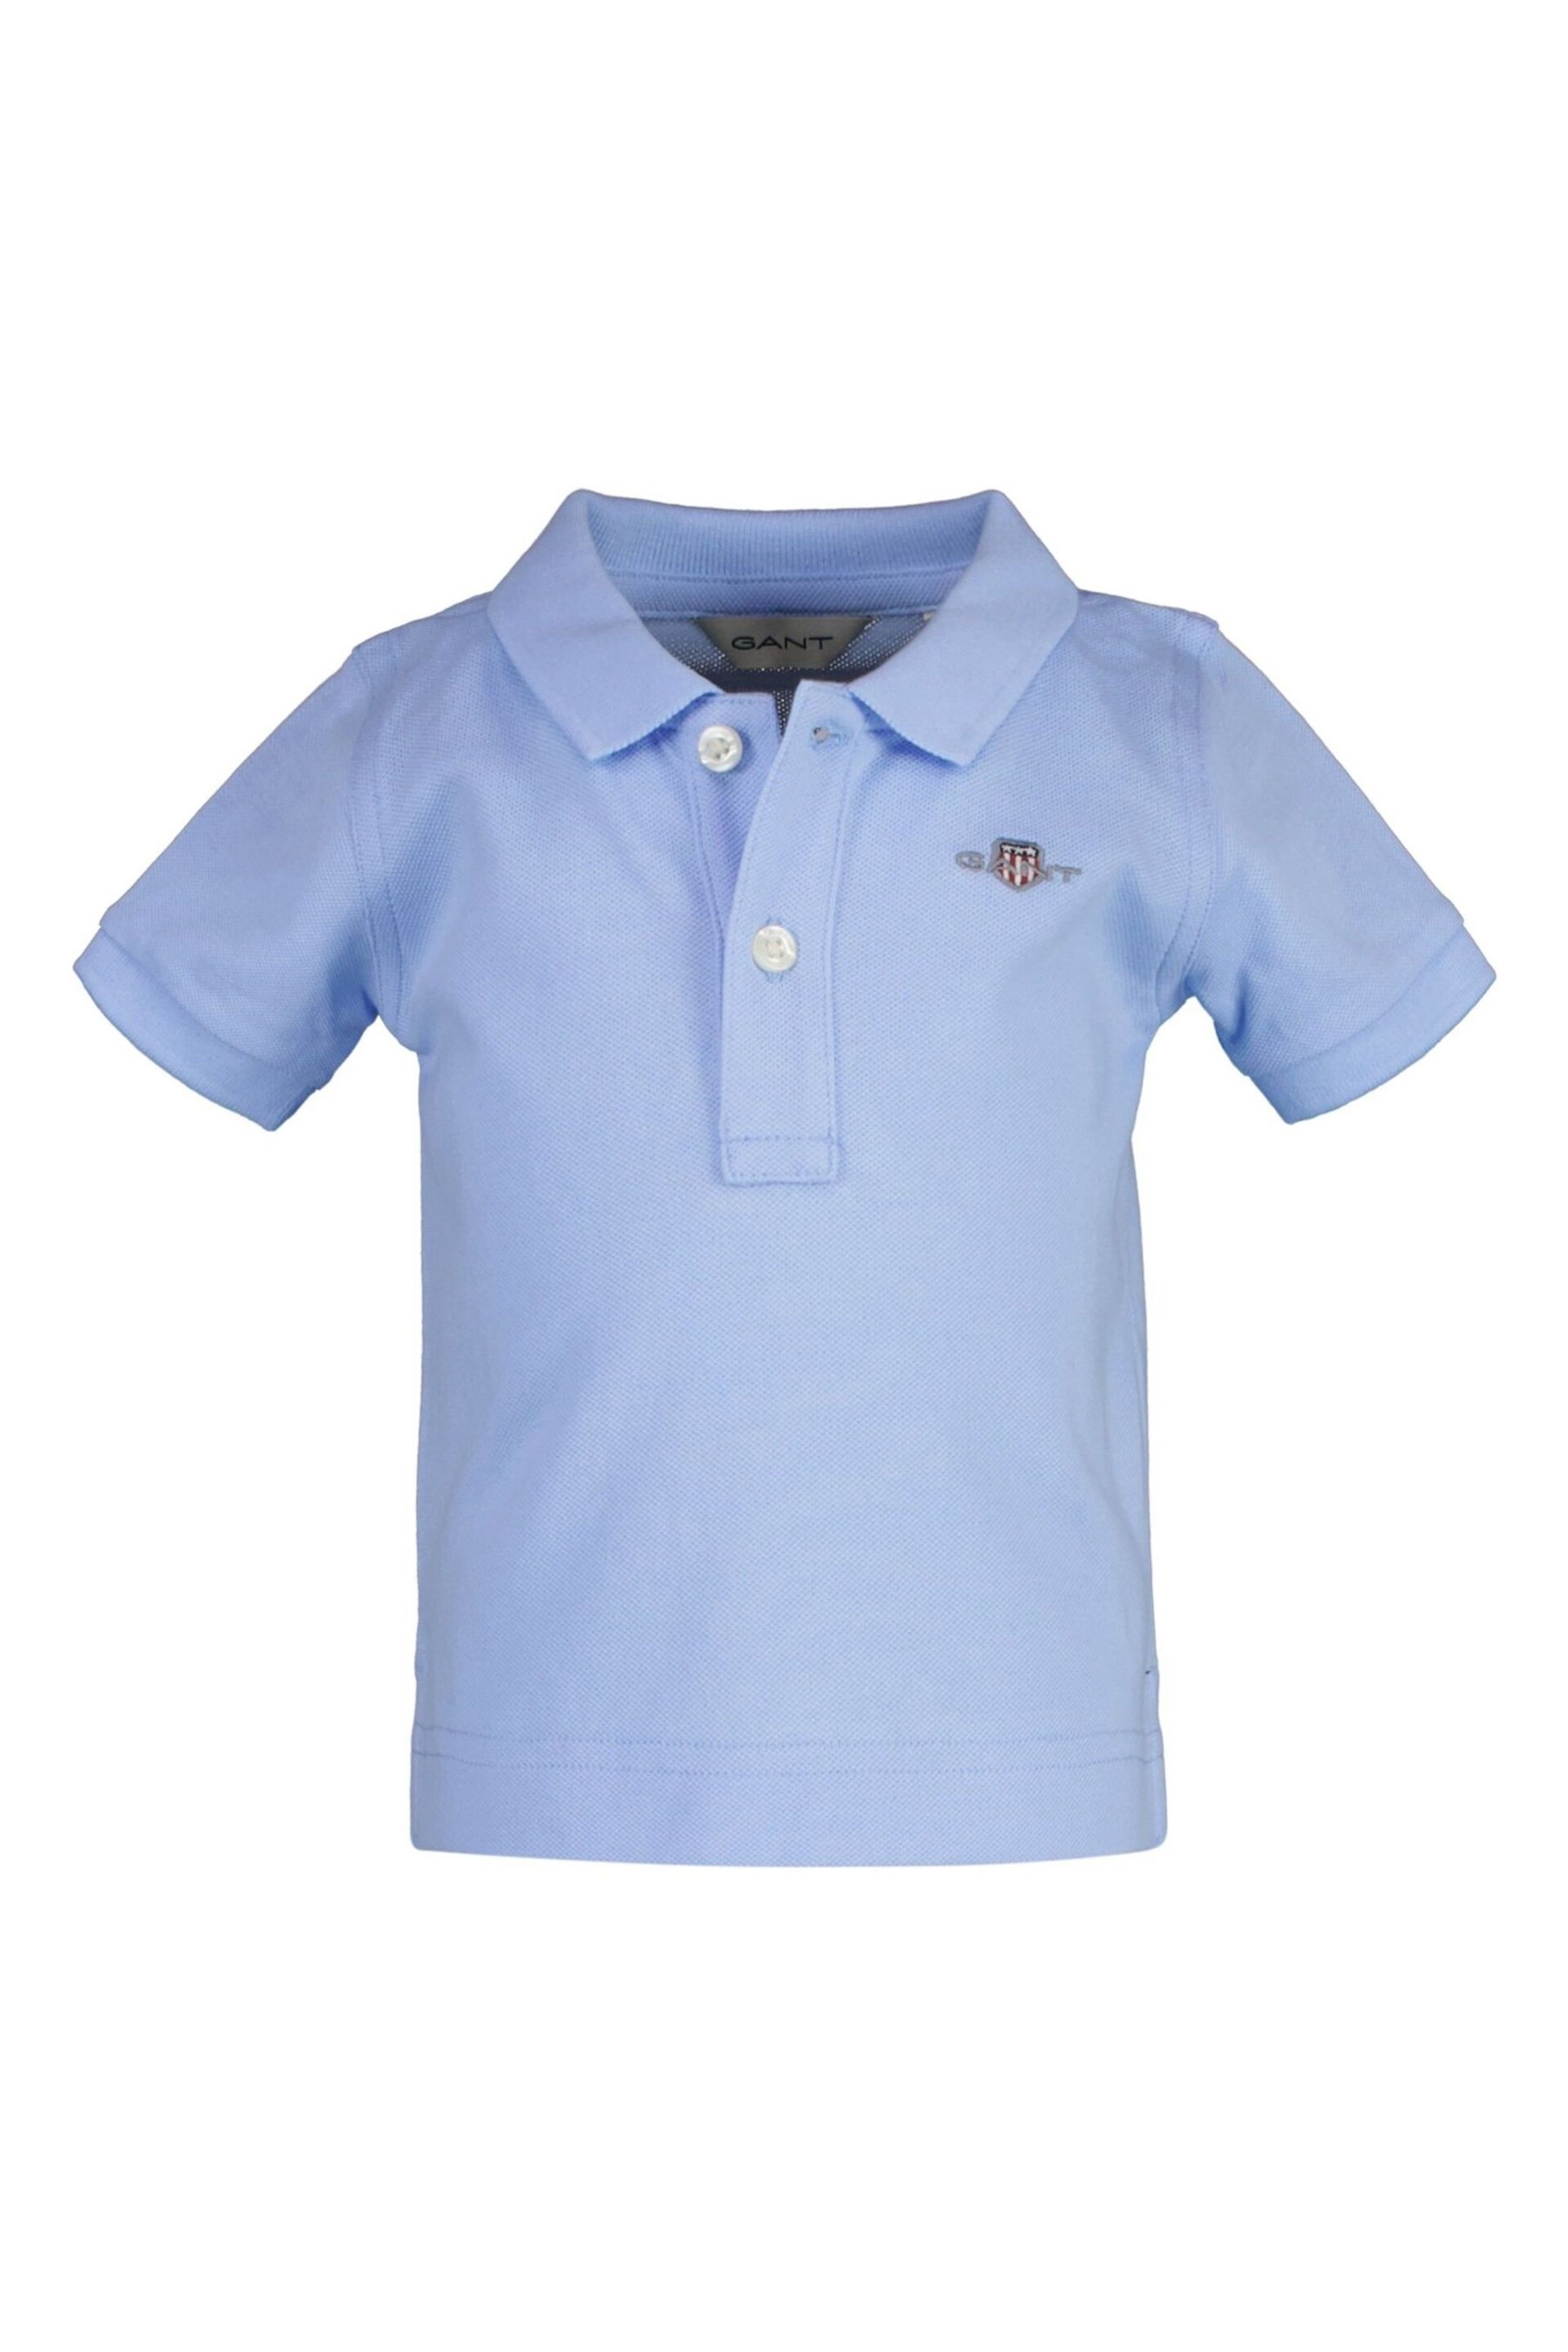 GANT Blue Baby Shield Piqué Polo Shirt - Image 1 of 1